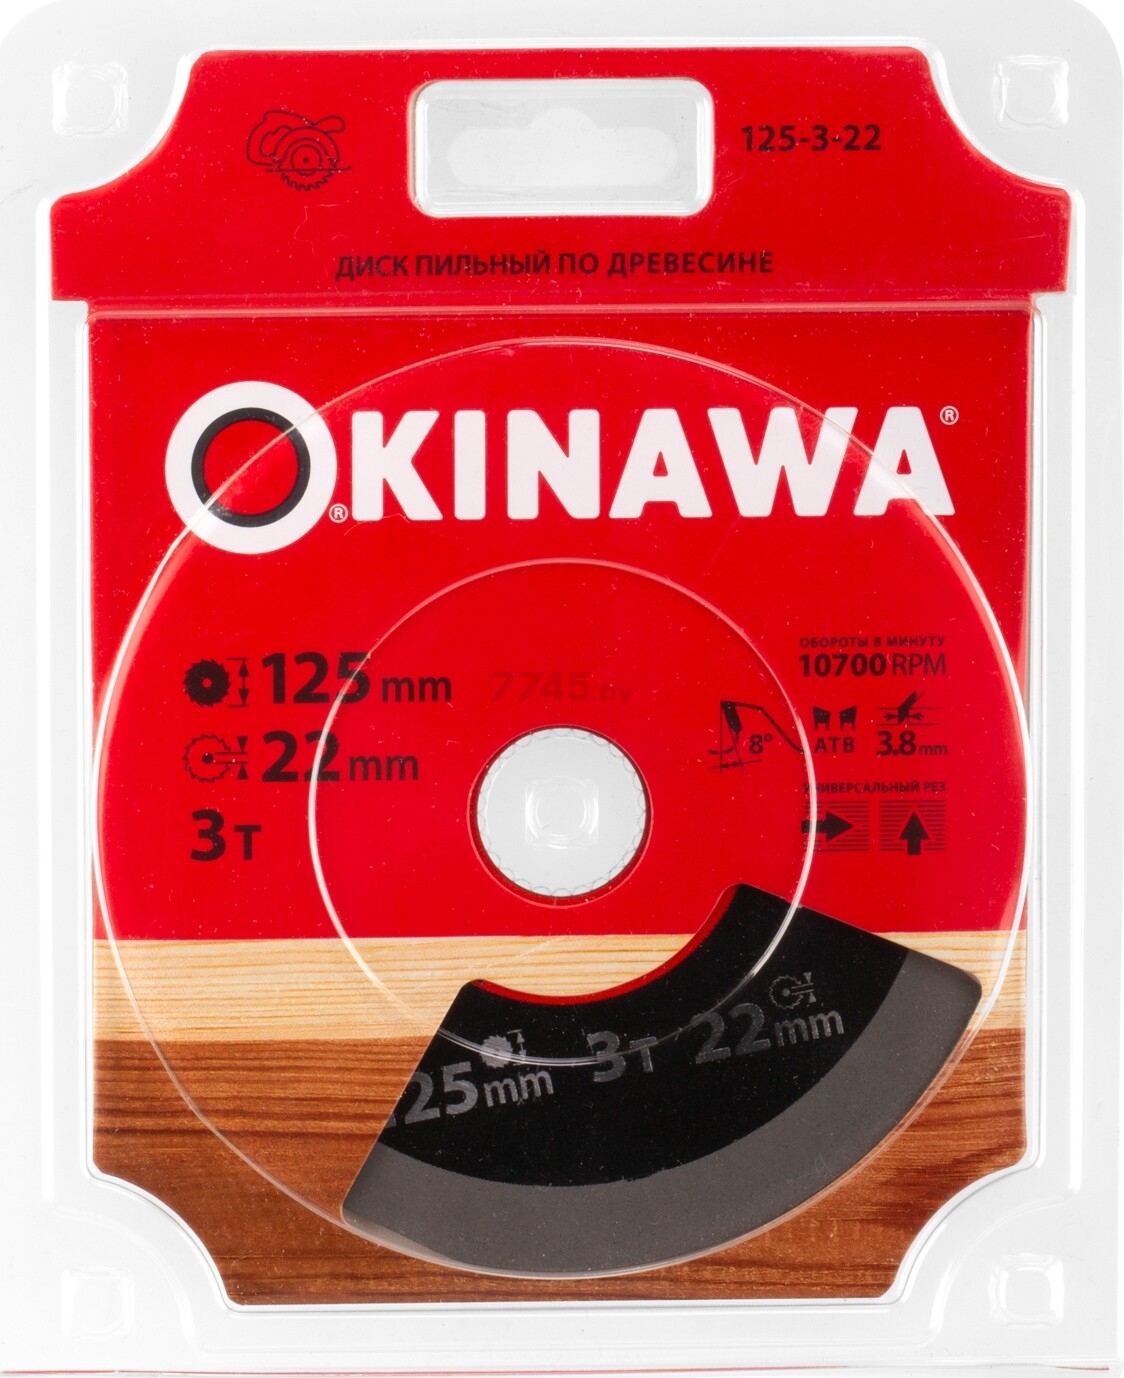 Диск пильный 125х22,2 мм 3 зуба OKINAWA по дереву (125-3-22) - Фото 2